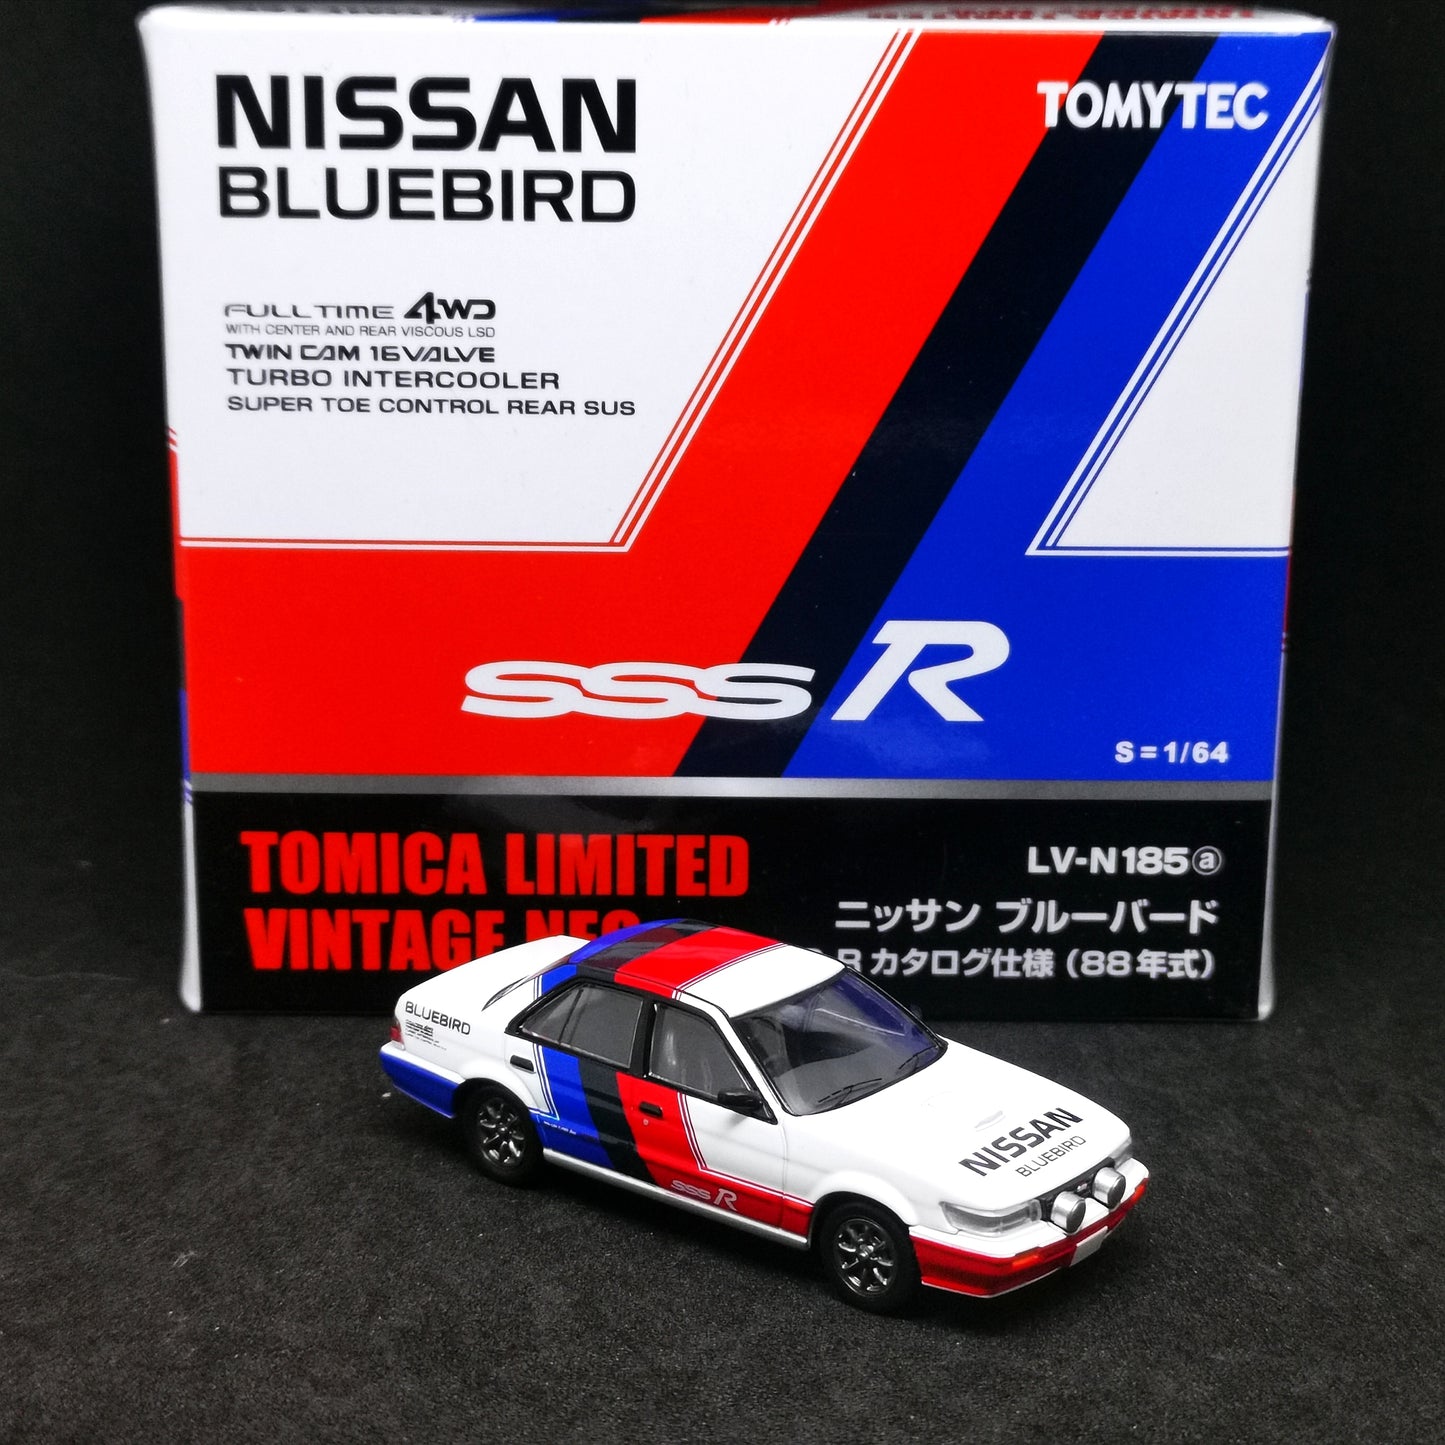 Tomica Limited Vintage Neo Nissan Blue Bird SSS R catalog specification 